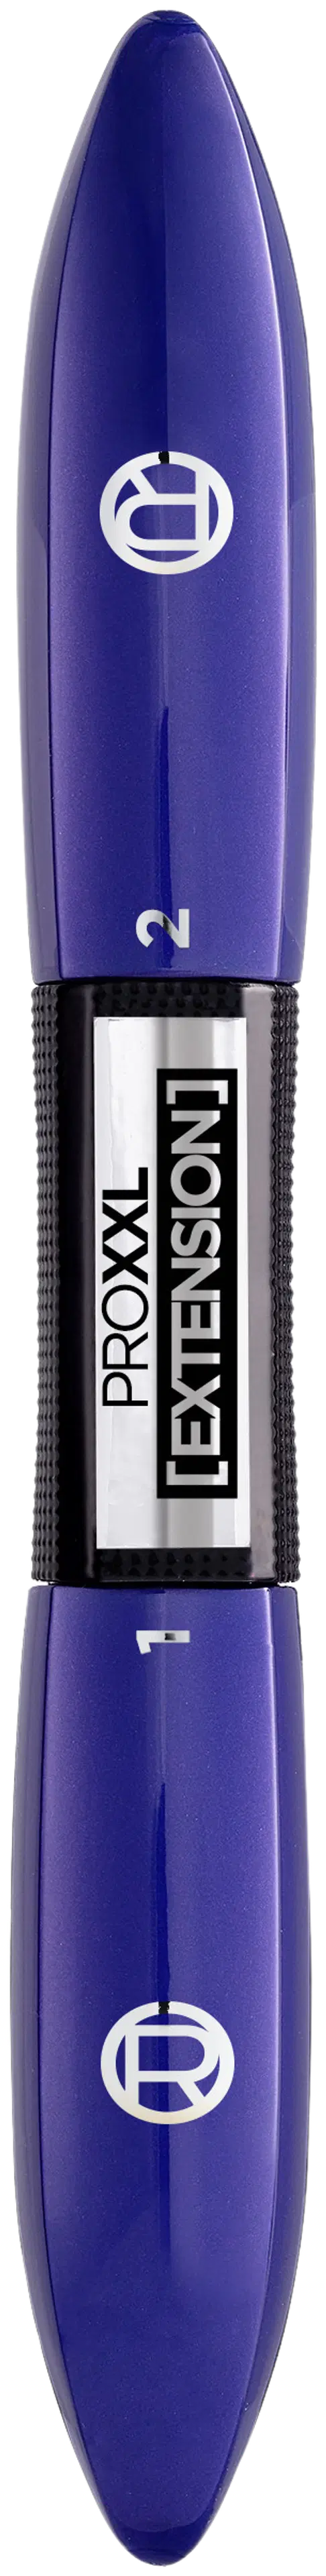 L'Oréal Paris Pro XXL Extension musta maskara 12ml